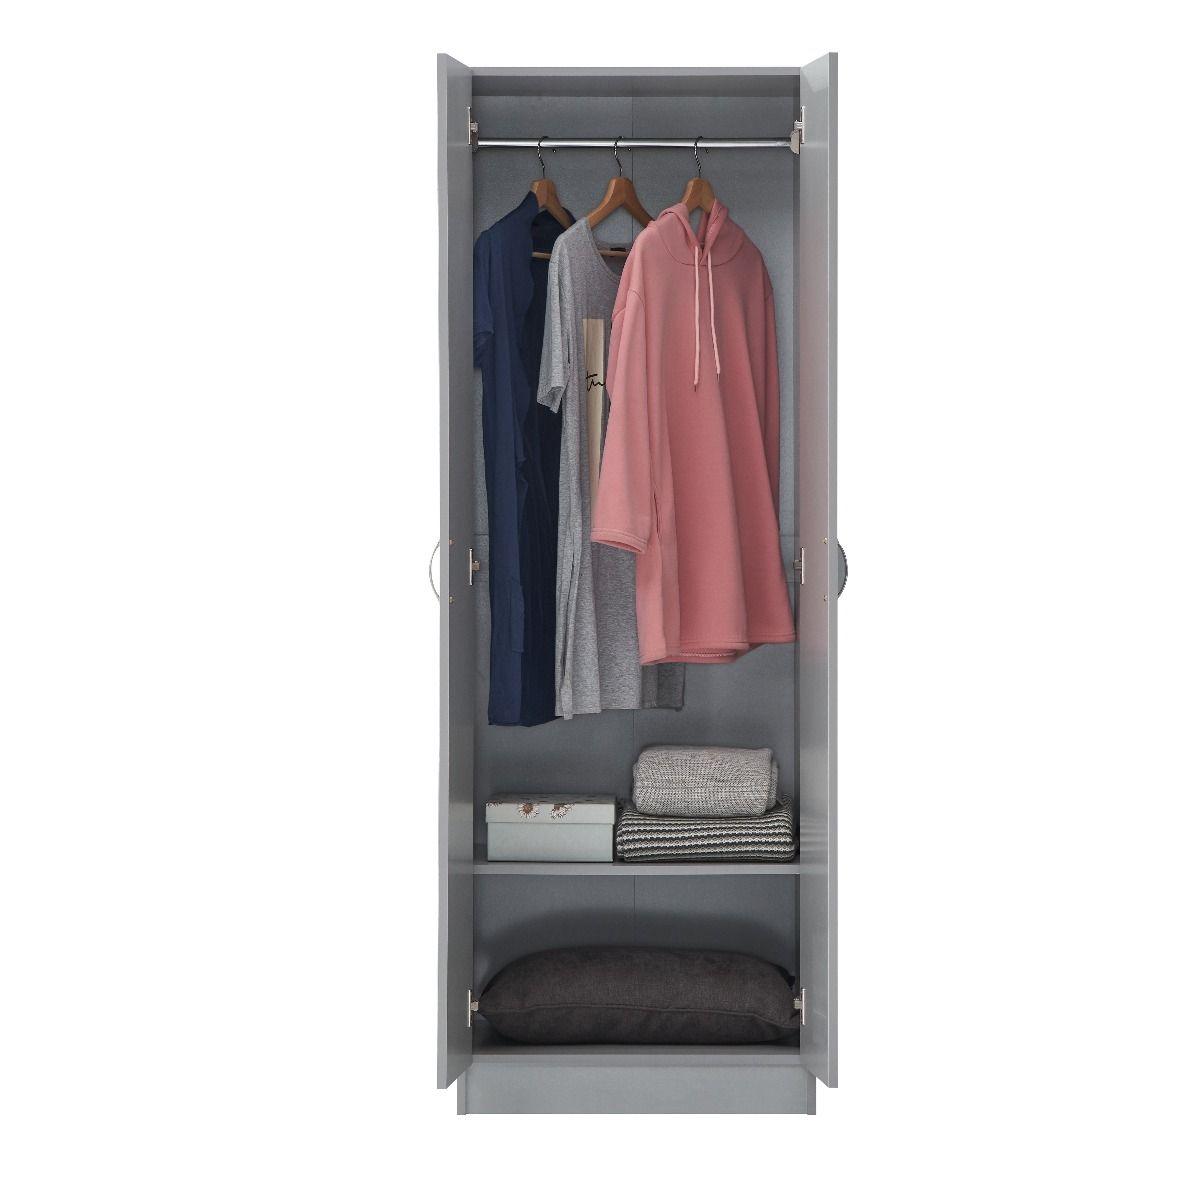 Essentials Door Wardrobe Hanging Rail allhomely